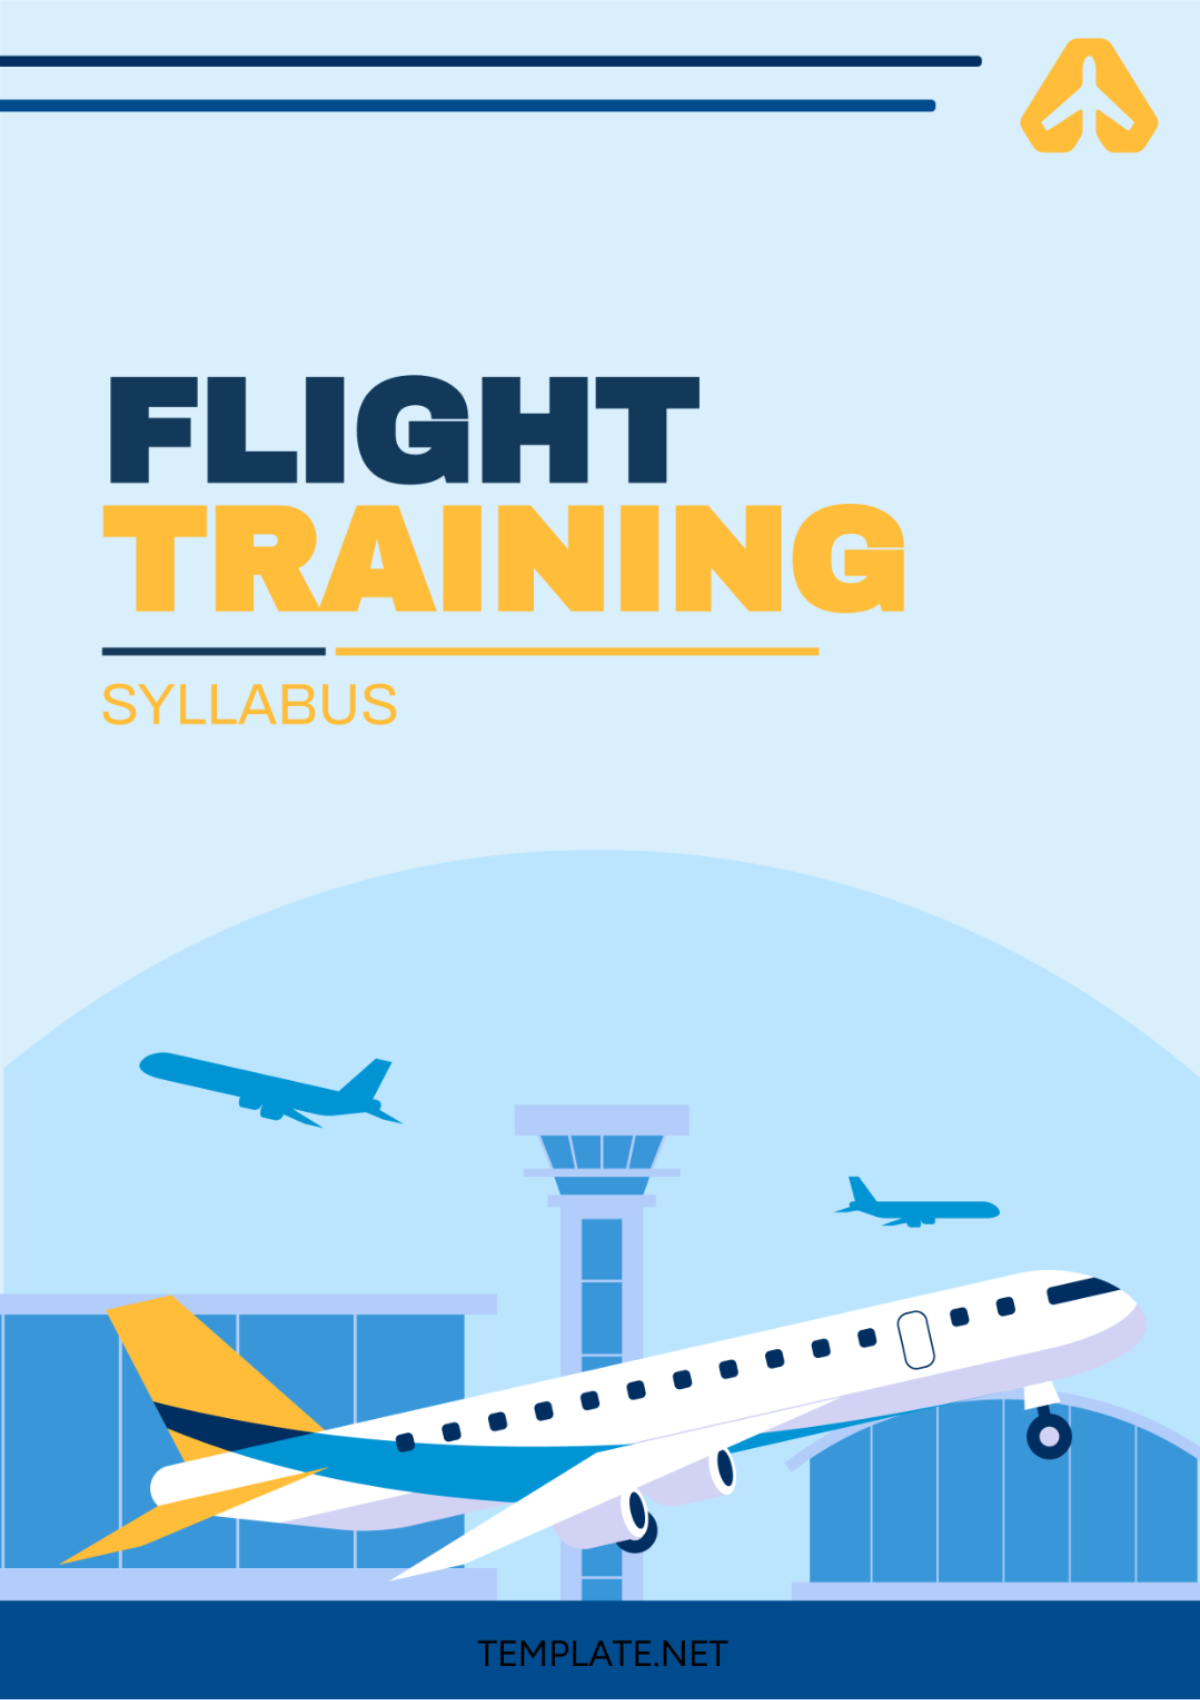 Flight Training Syllabus Template